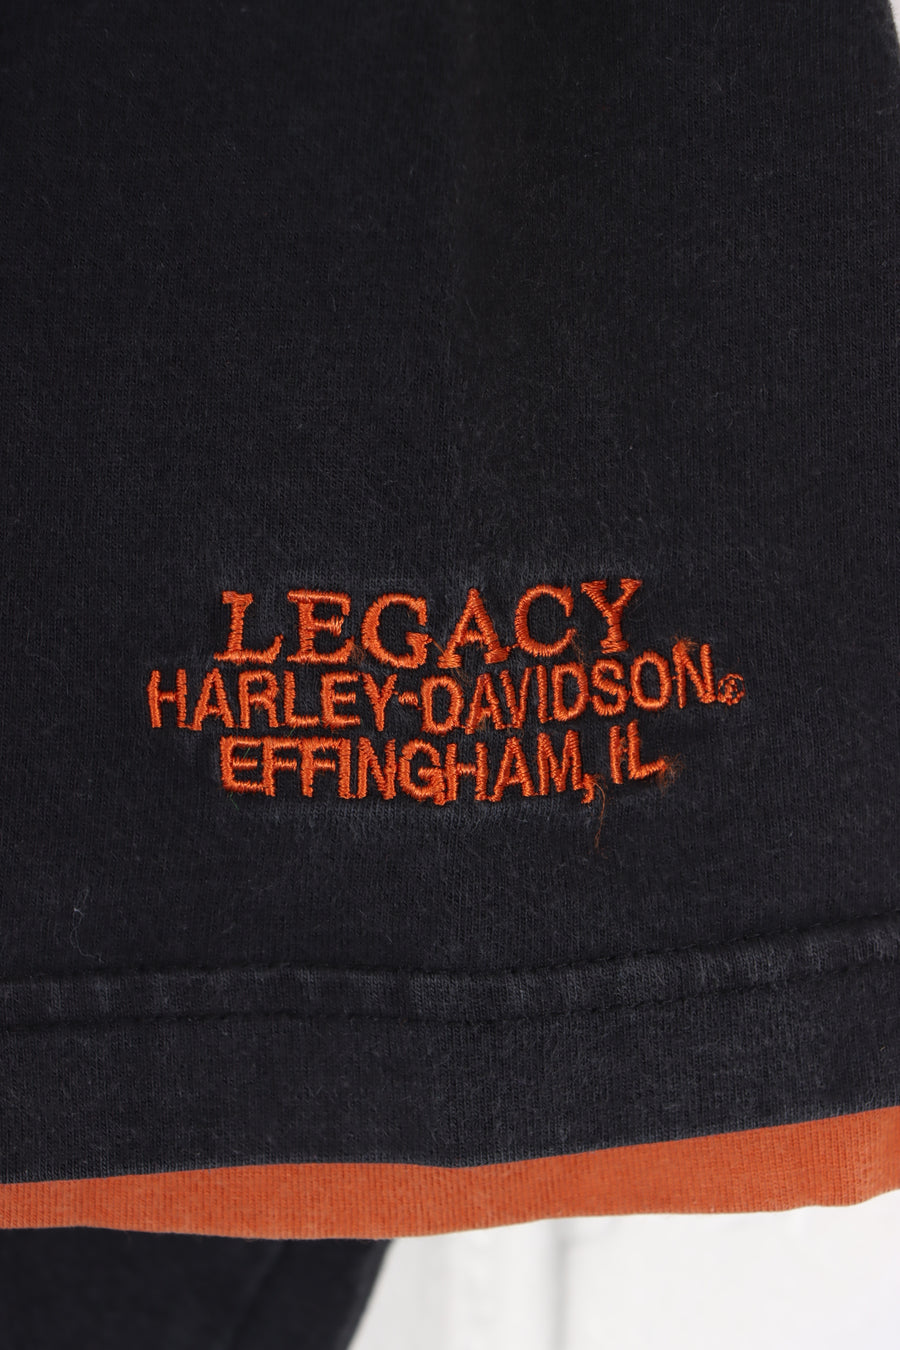 Legacy HARLEY DAVIDSON "Live Free Ride Hard" Polo Shirt (XXL) - Vintage Sole Melbourne